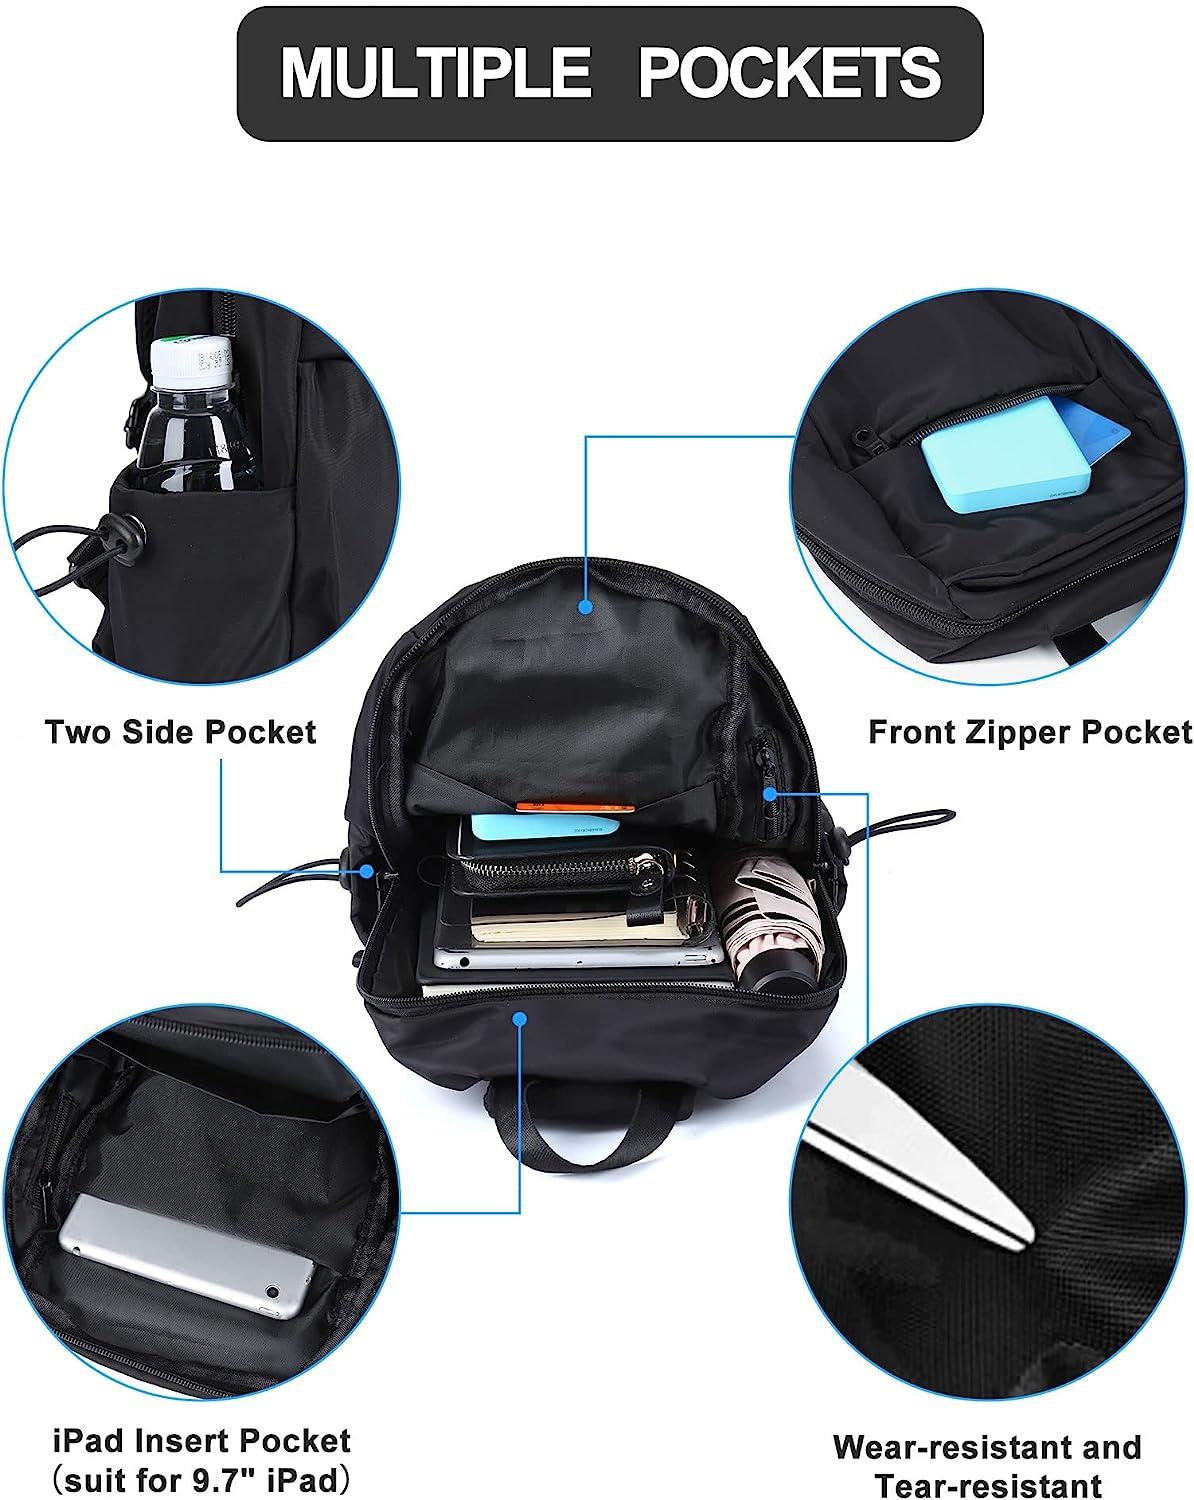 CARRY TRIP Stylish Men's Sling Bag | Multipurpose Crossbody Travel Bag with  Adjustable Strap | Shoulder Bag for College, Outdoor Travels, and Business